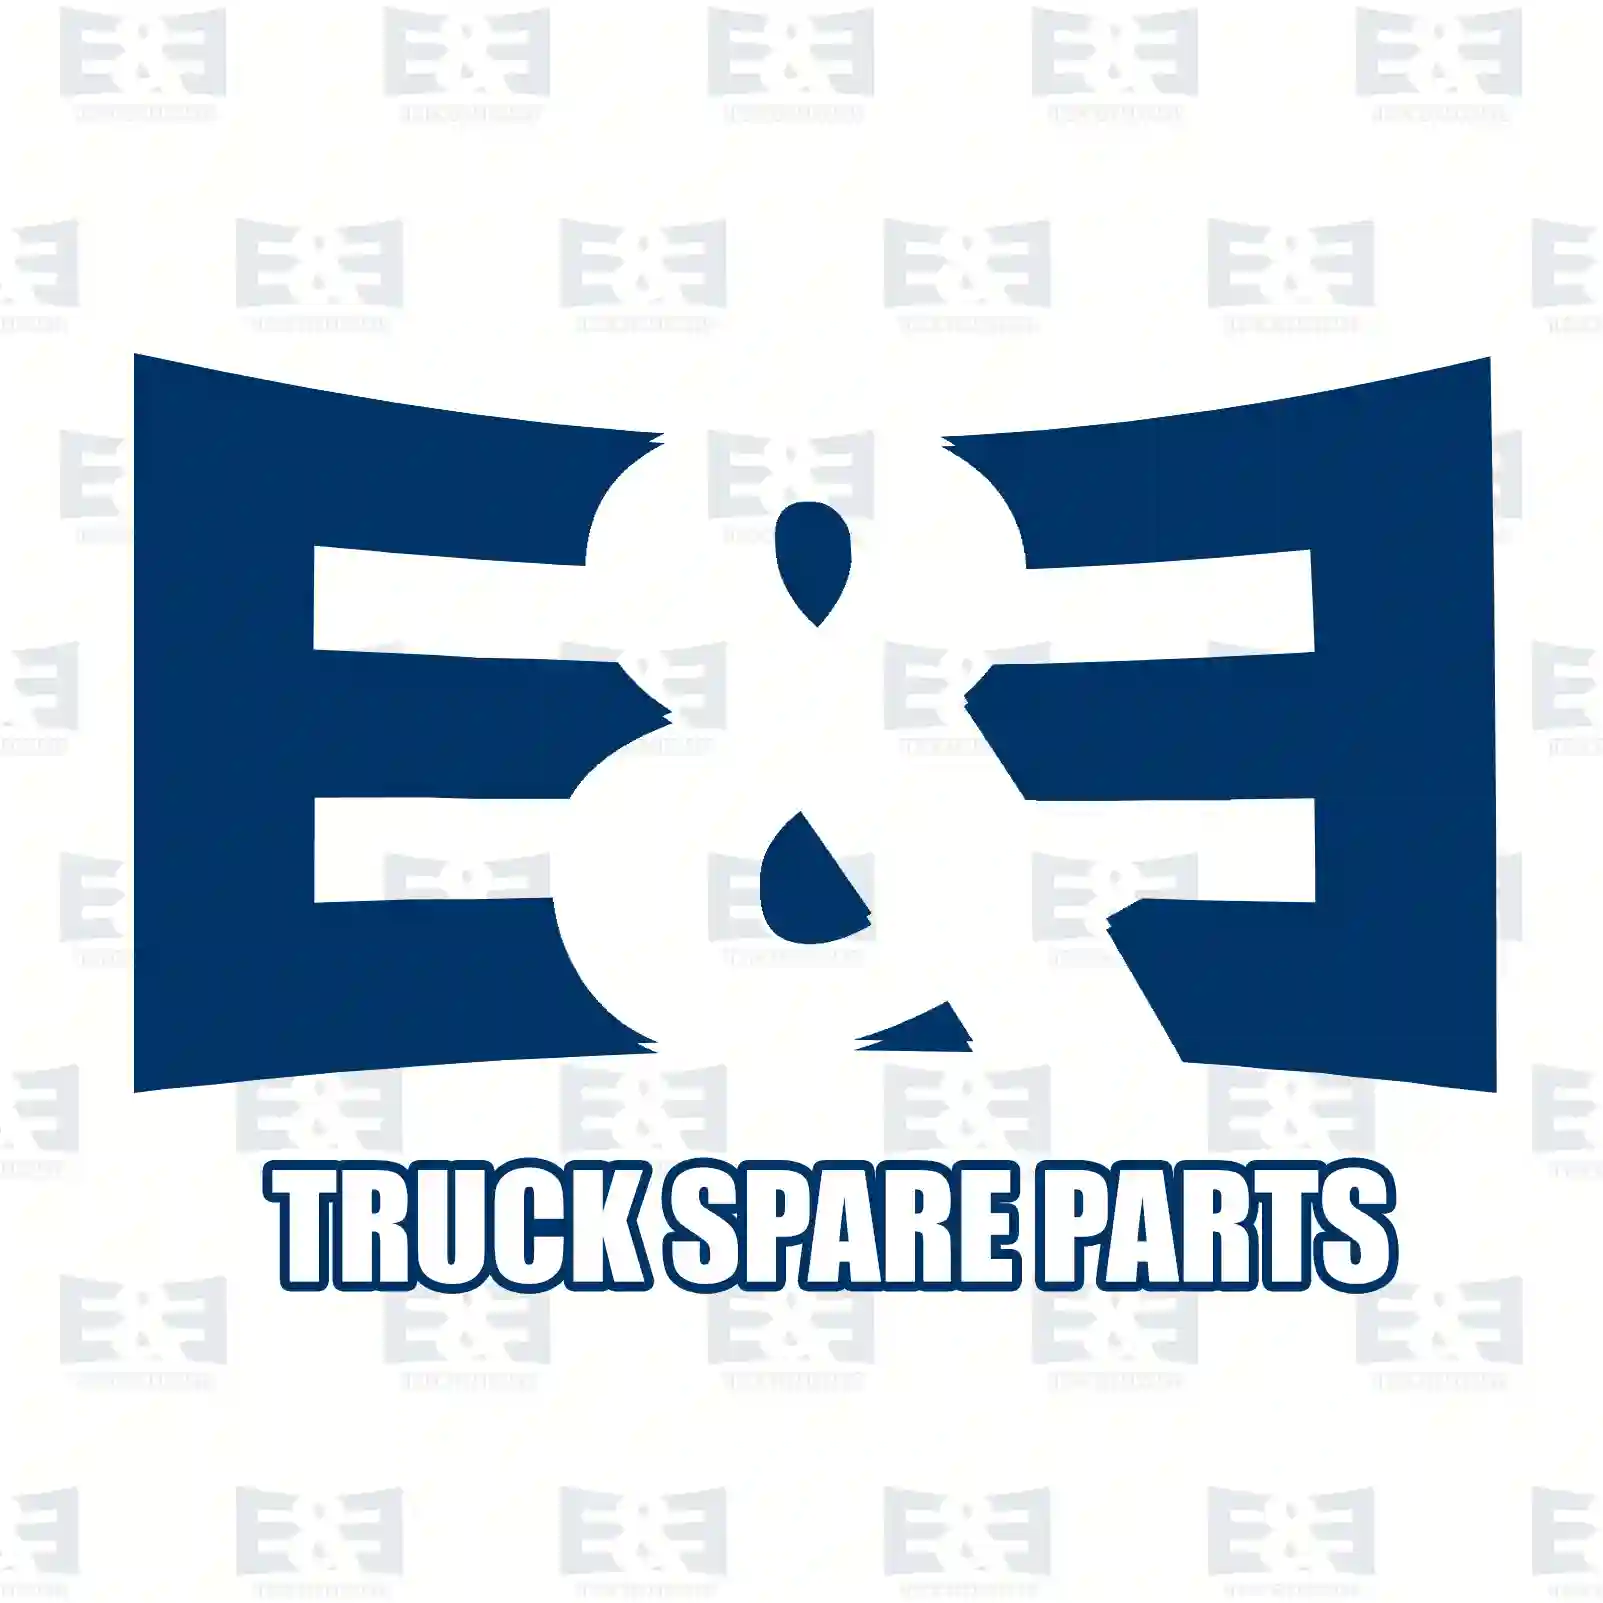 Drive Shaft Flange, EE No 2E2270673 ,  oem no:81391155104, 8139 E&E Truck Spare Parts | Truck Spare Parts, Auotomotive Spare Parts